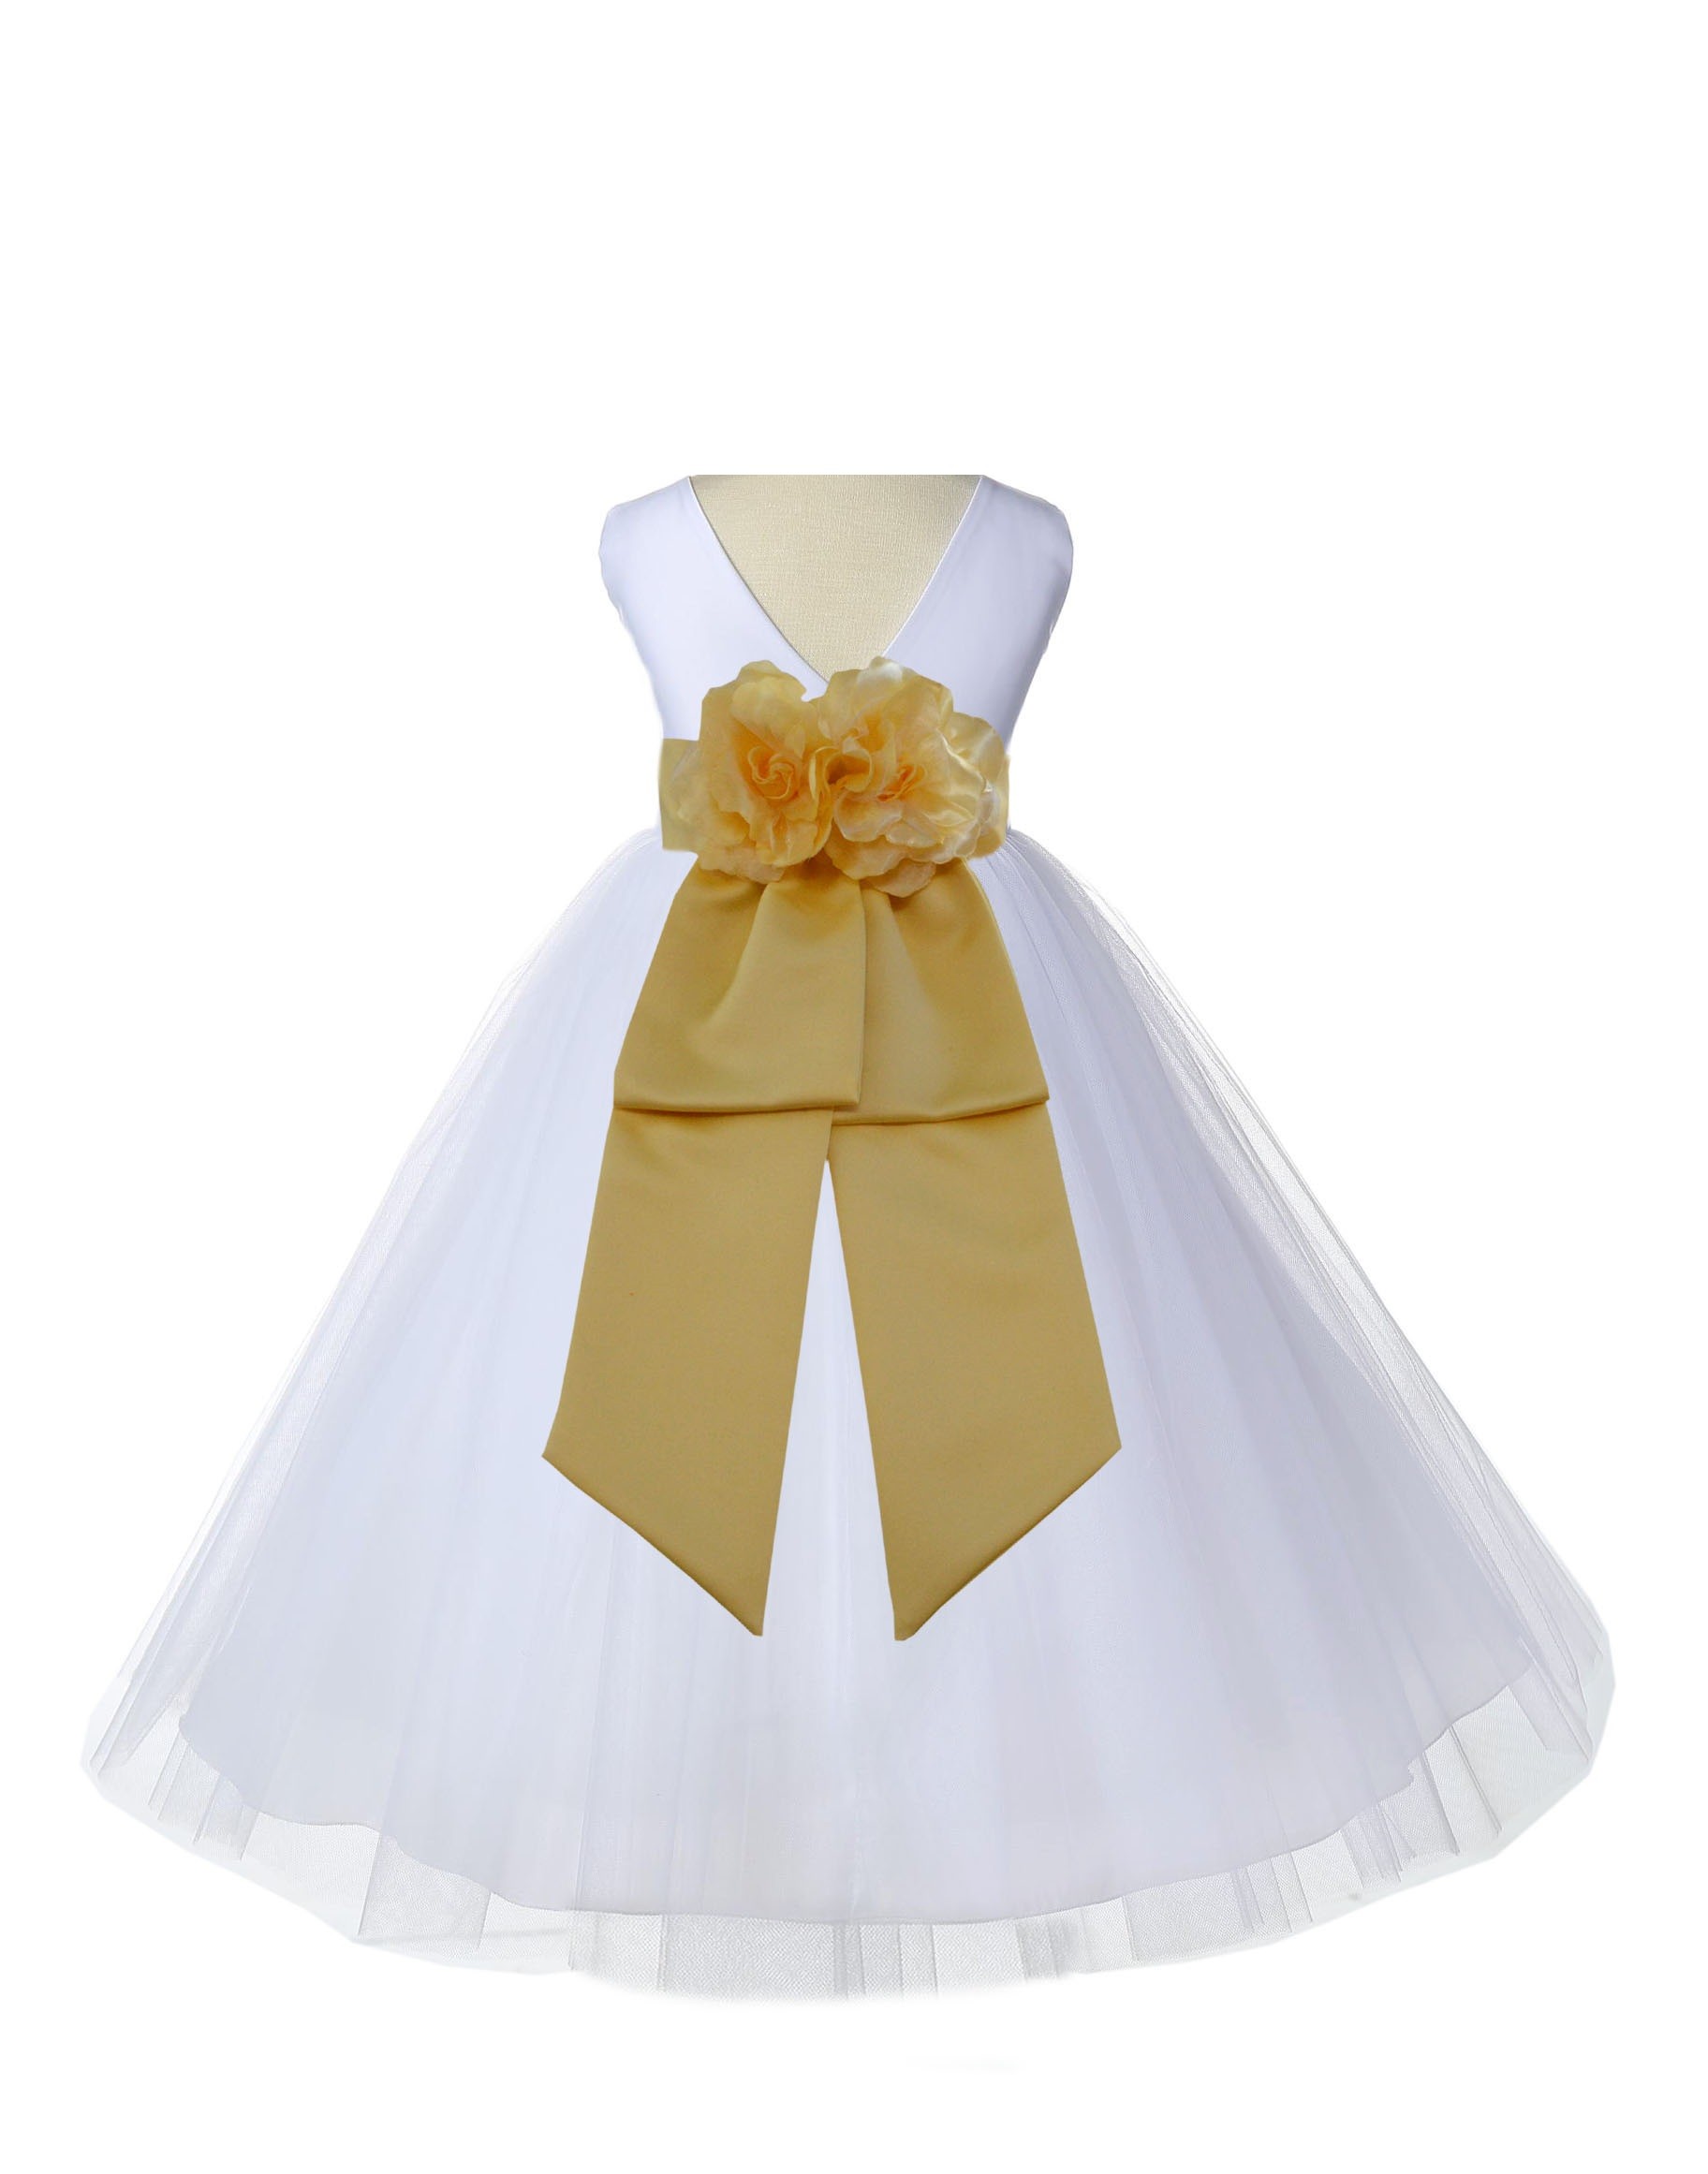 V-Neck Tulle White/Canary Flower Girl Dress Wedding Pageant 108